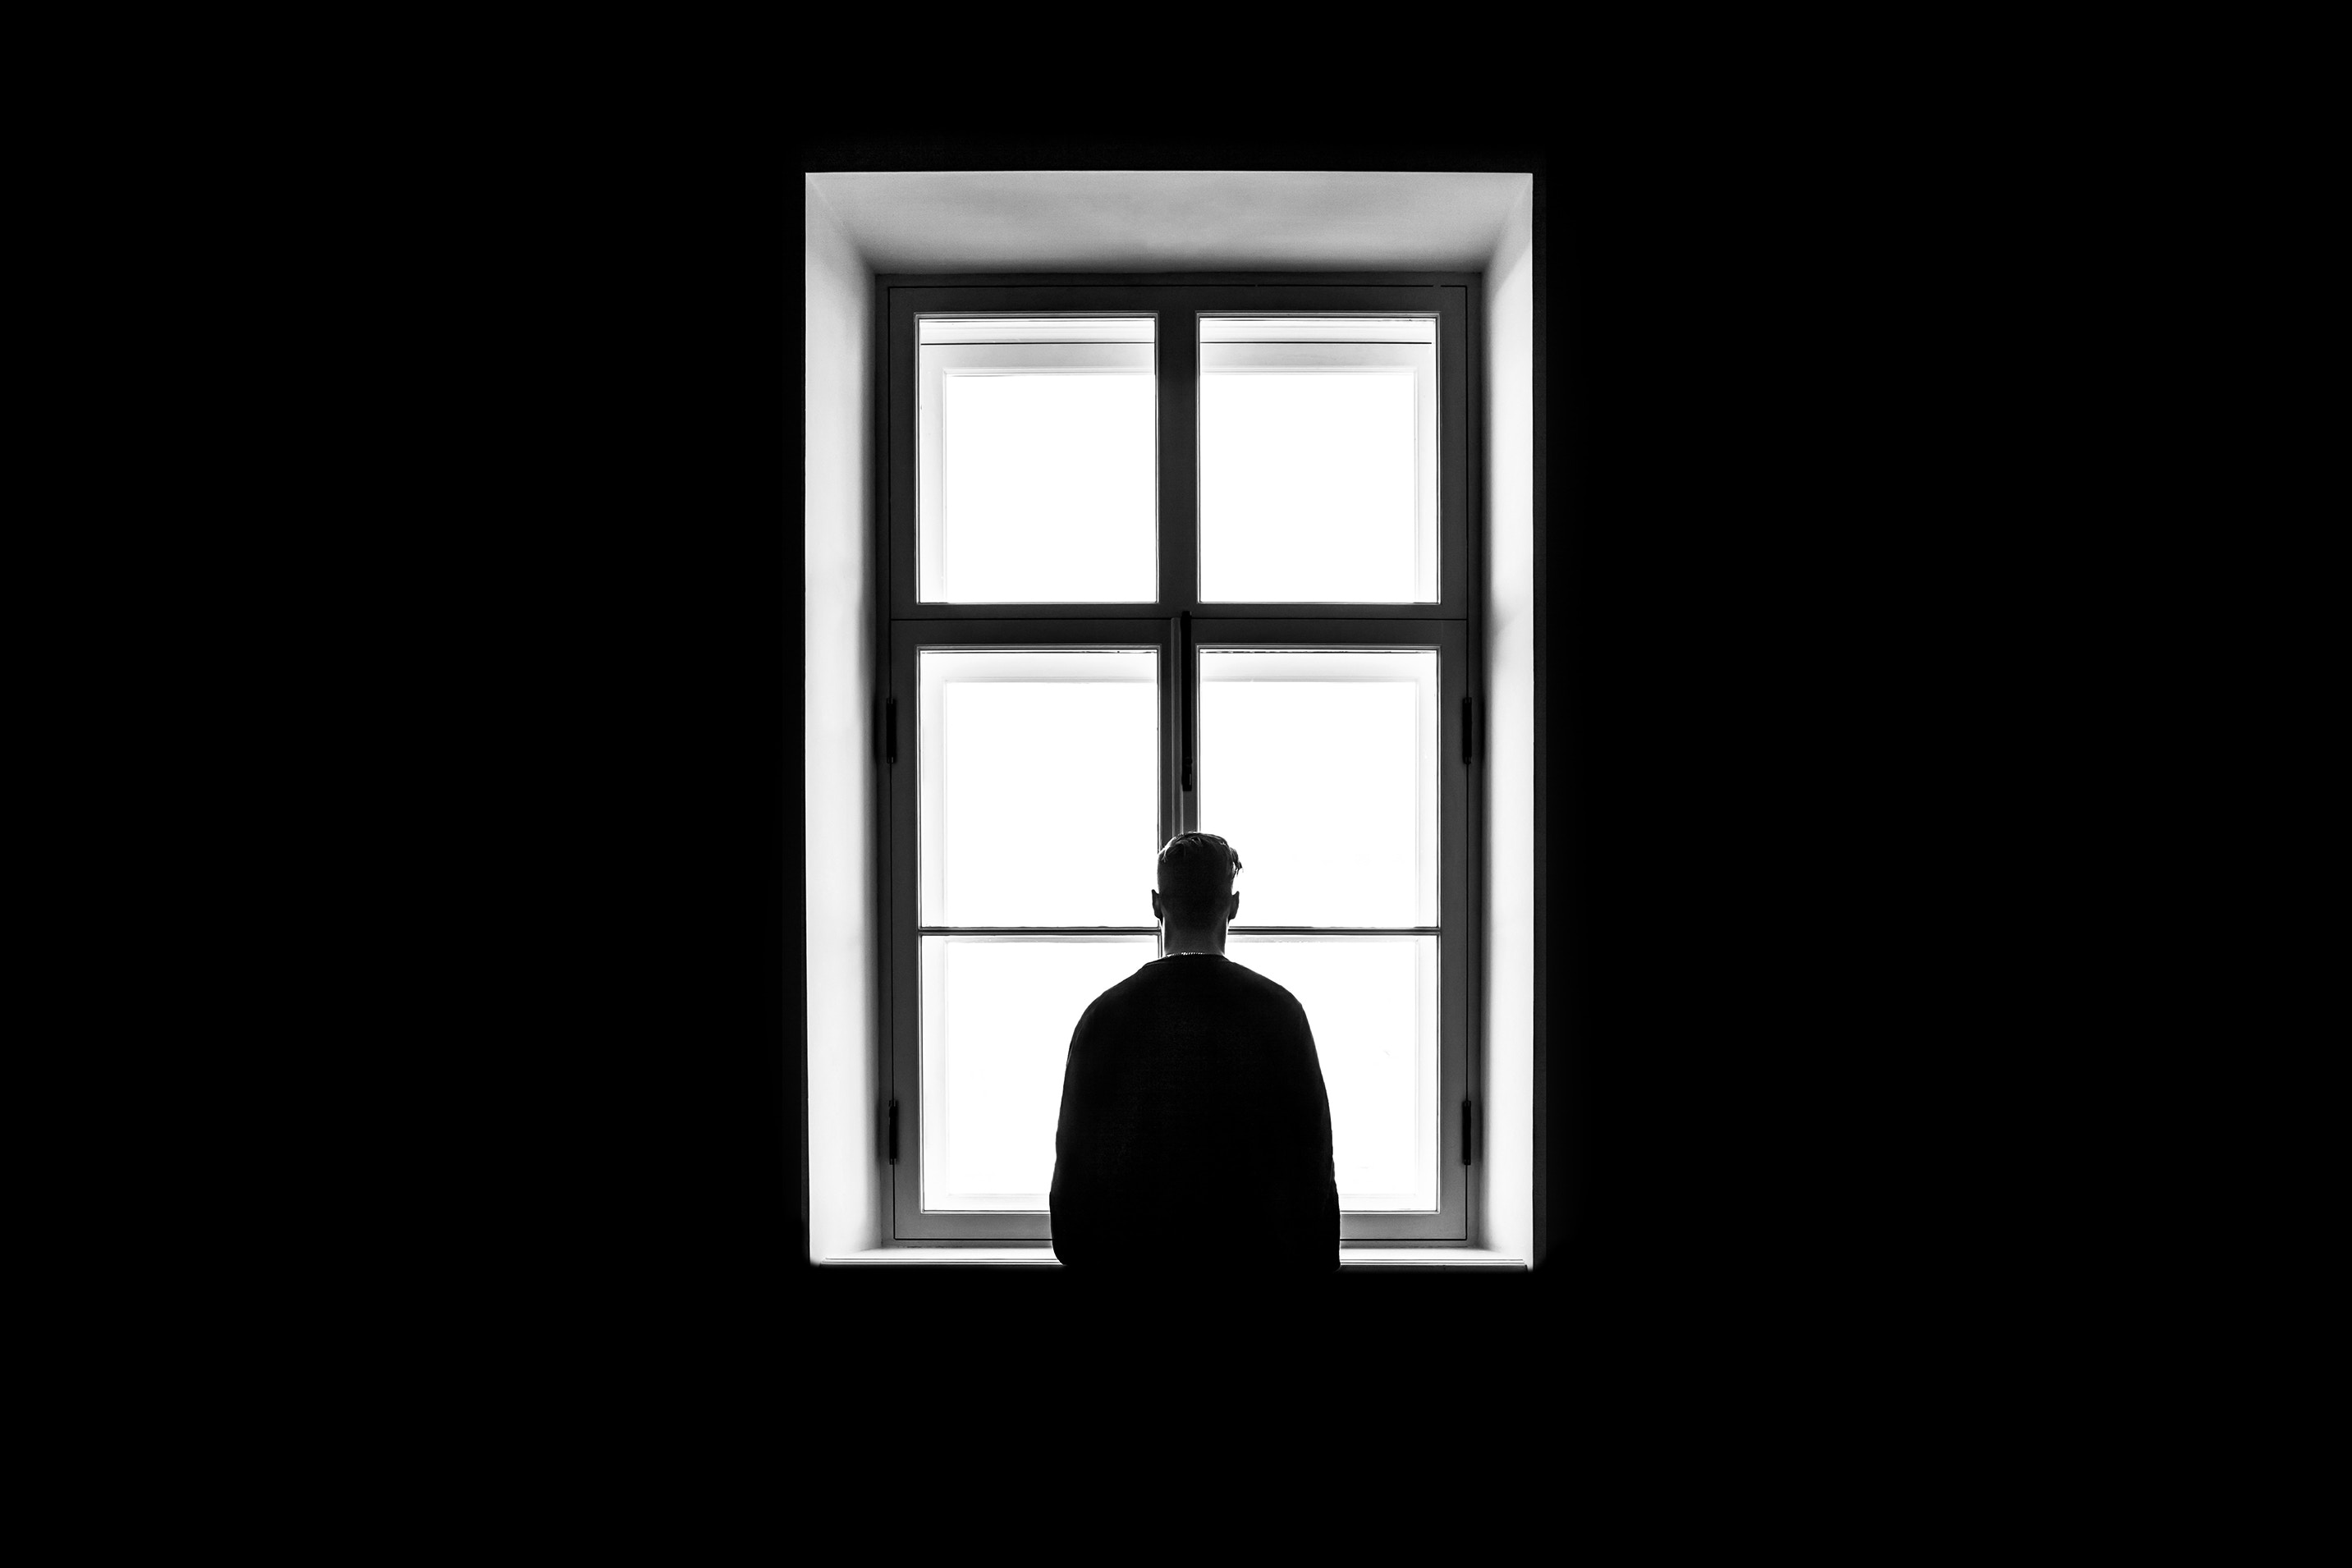 man, loneliness, minimalism, bw, chb, window